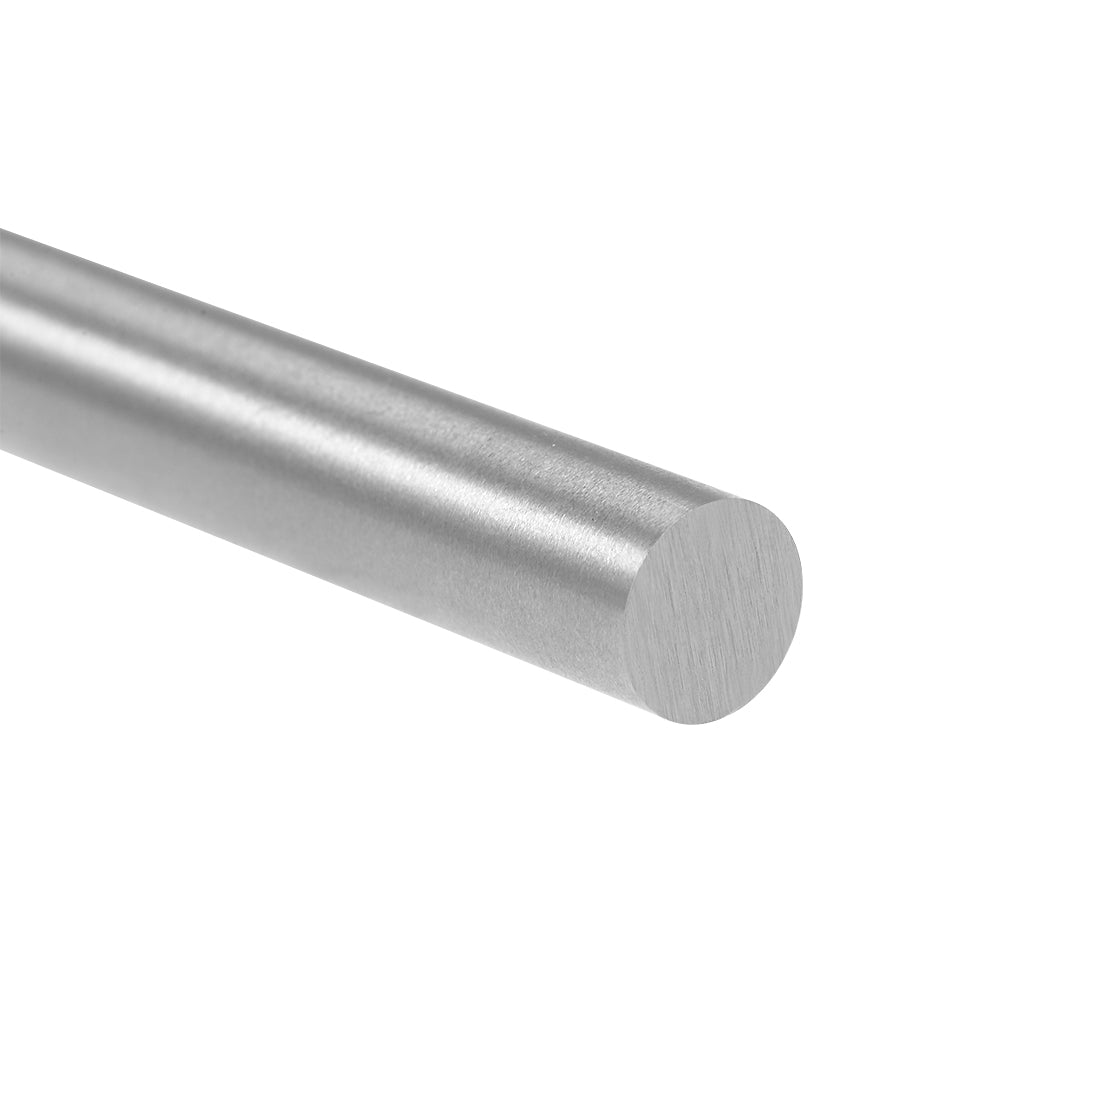 uxcell Uxcell Round Rod 6mm Diameter 100mm Length HSS Lathe Bar Stock DIY Craft Tool 5 Pcs